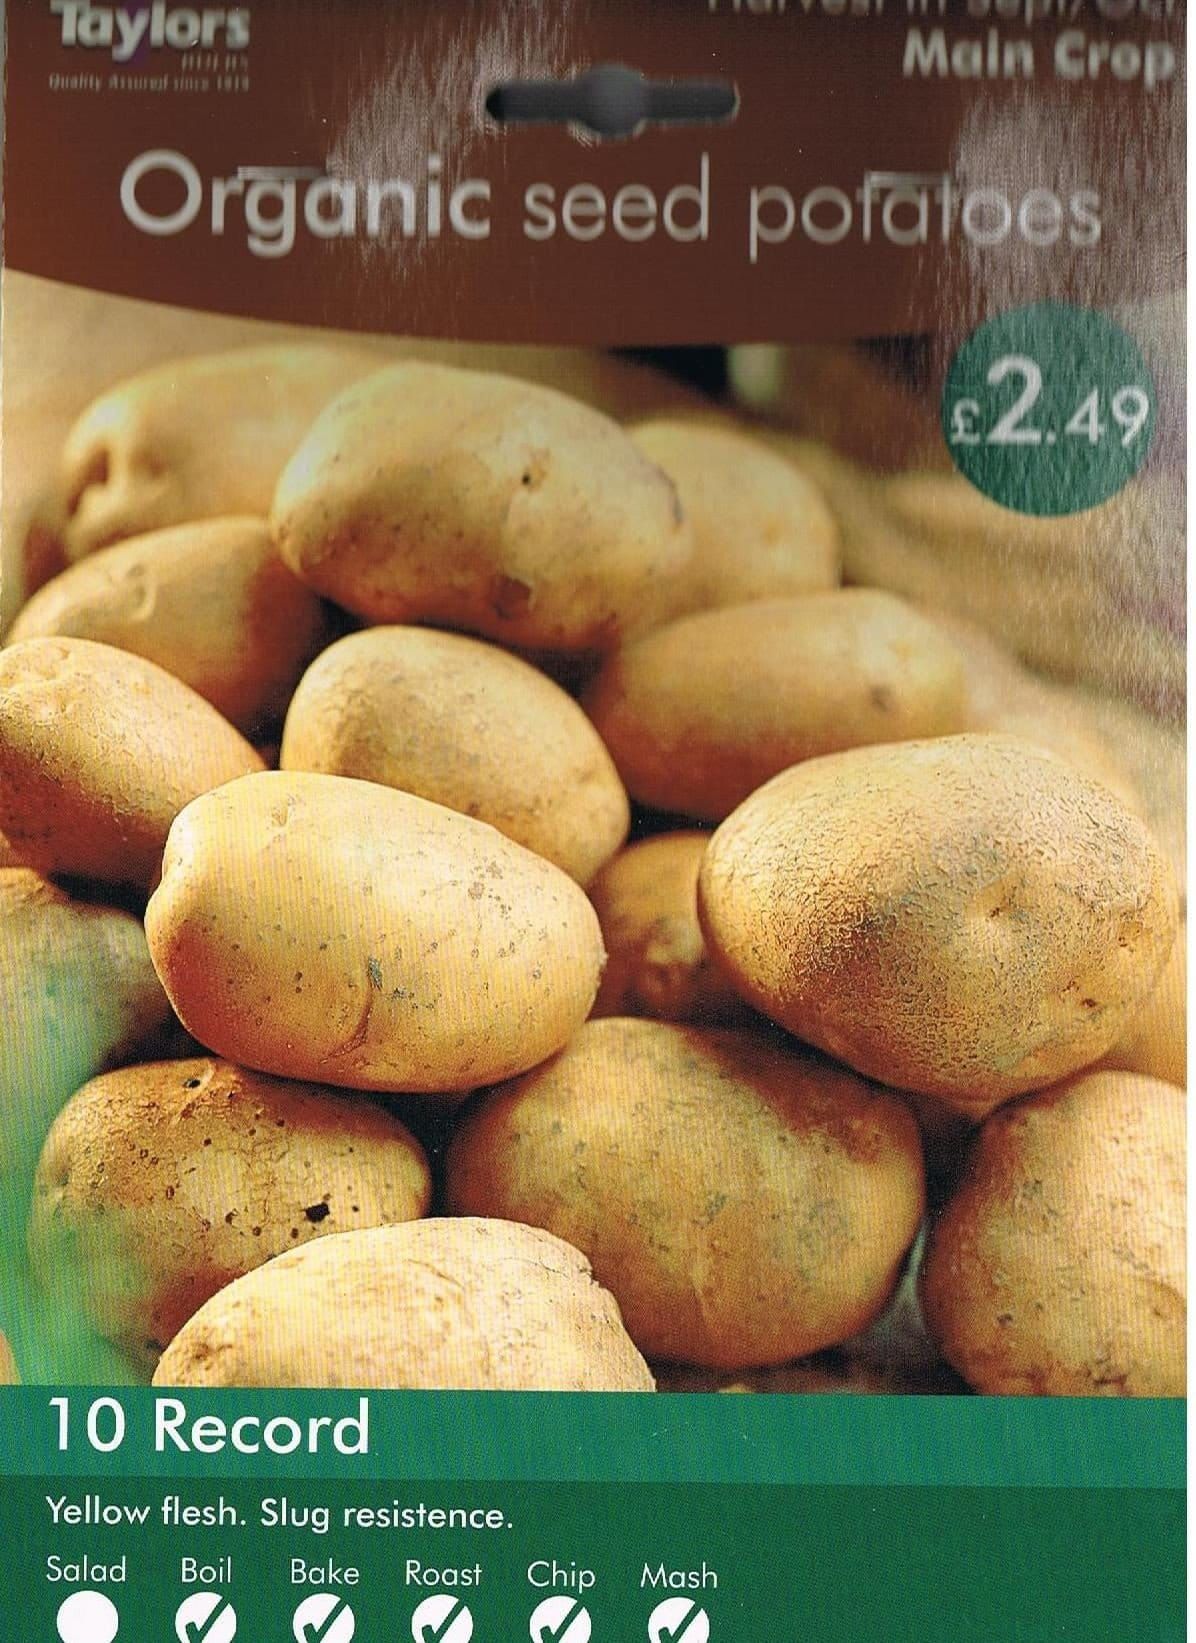 Taylors Seed Potatoes Record Organic 10 Tubers Main Crop